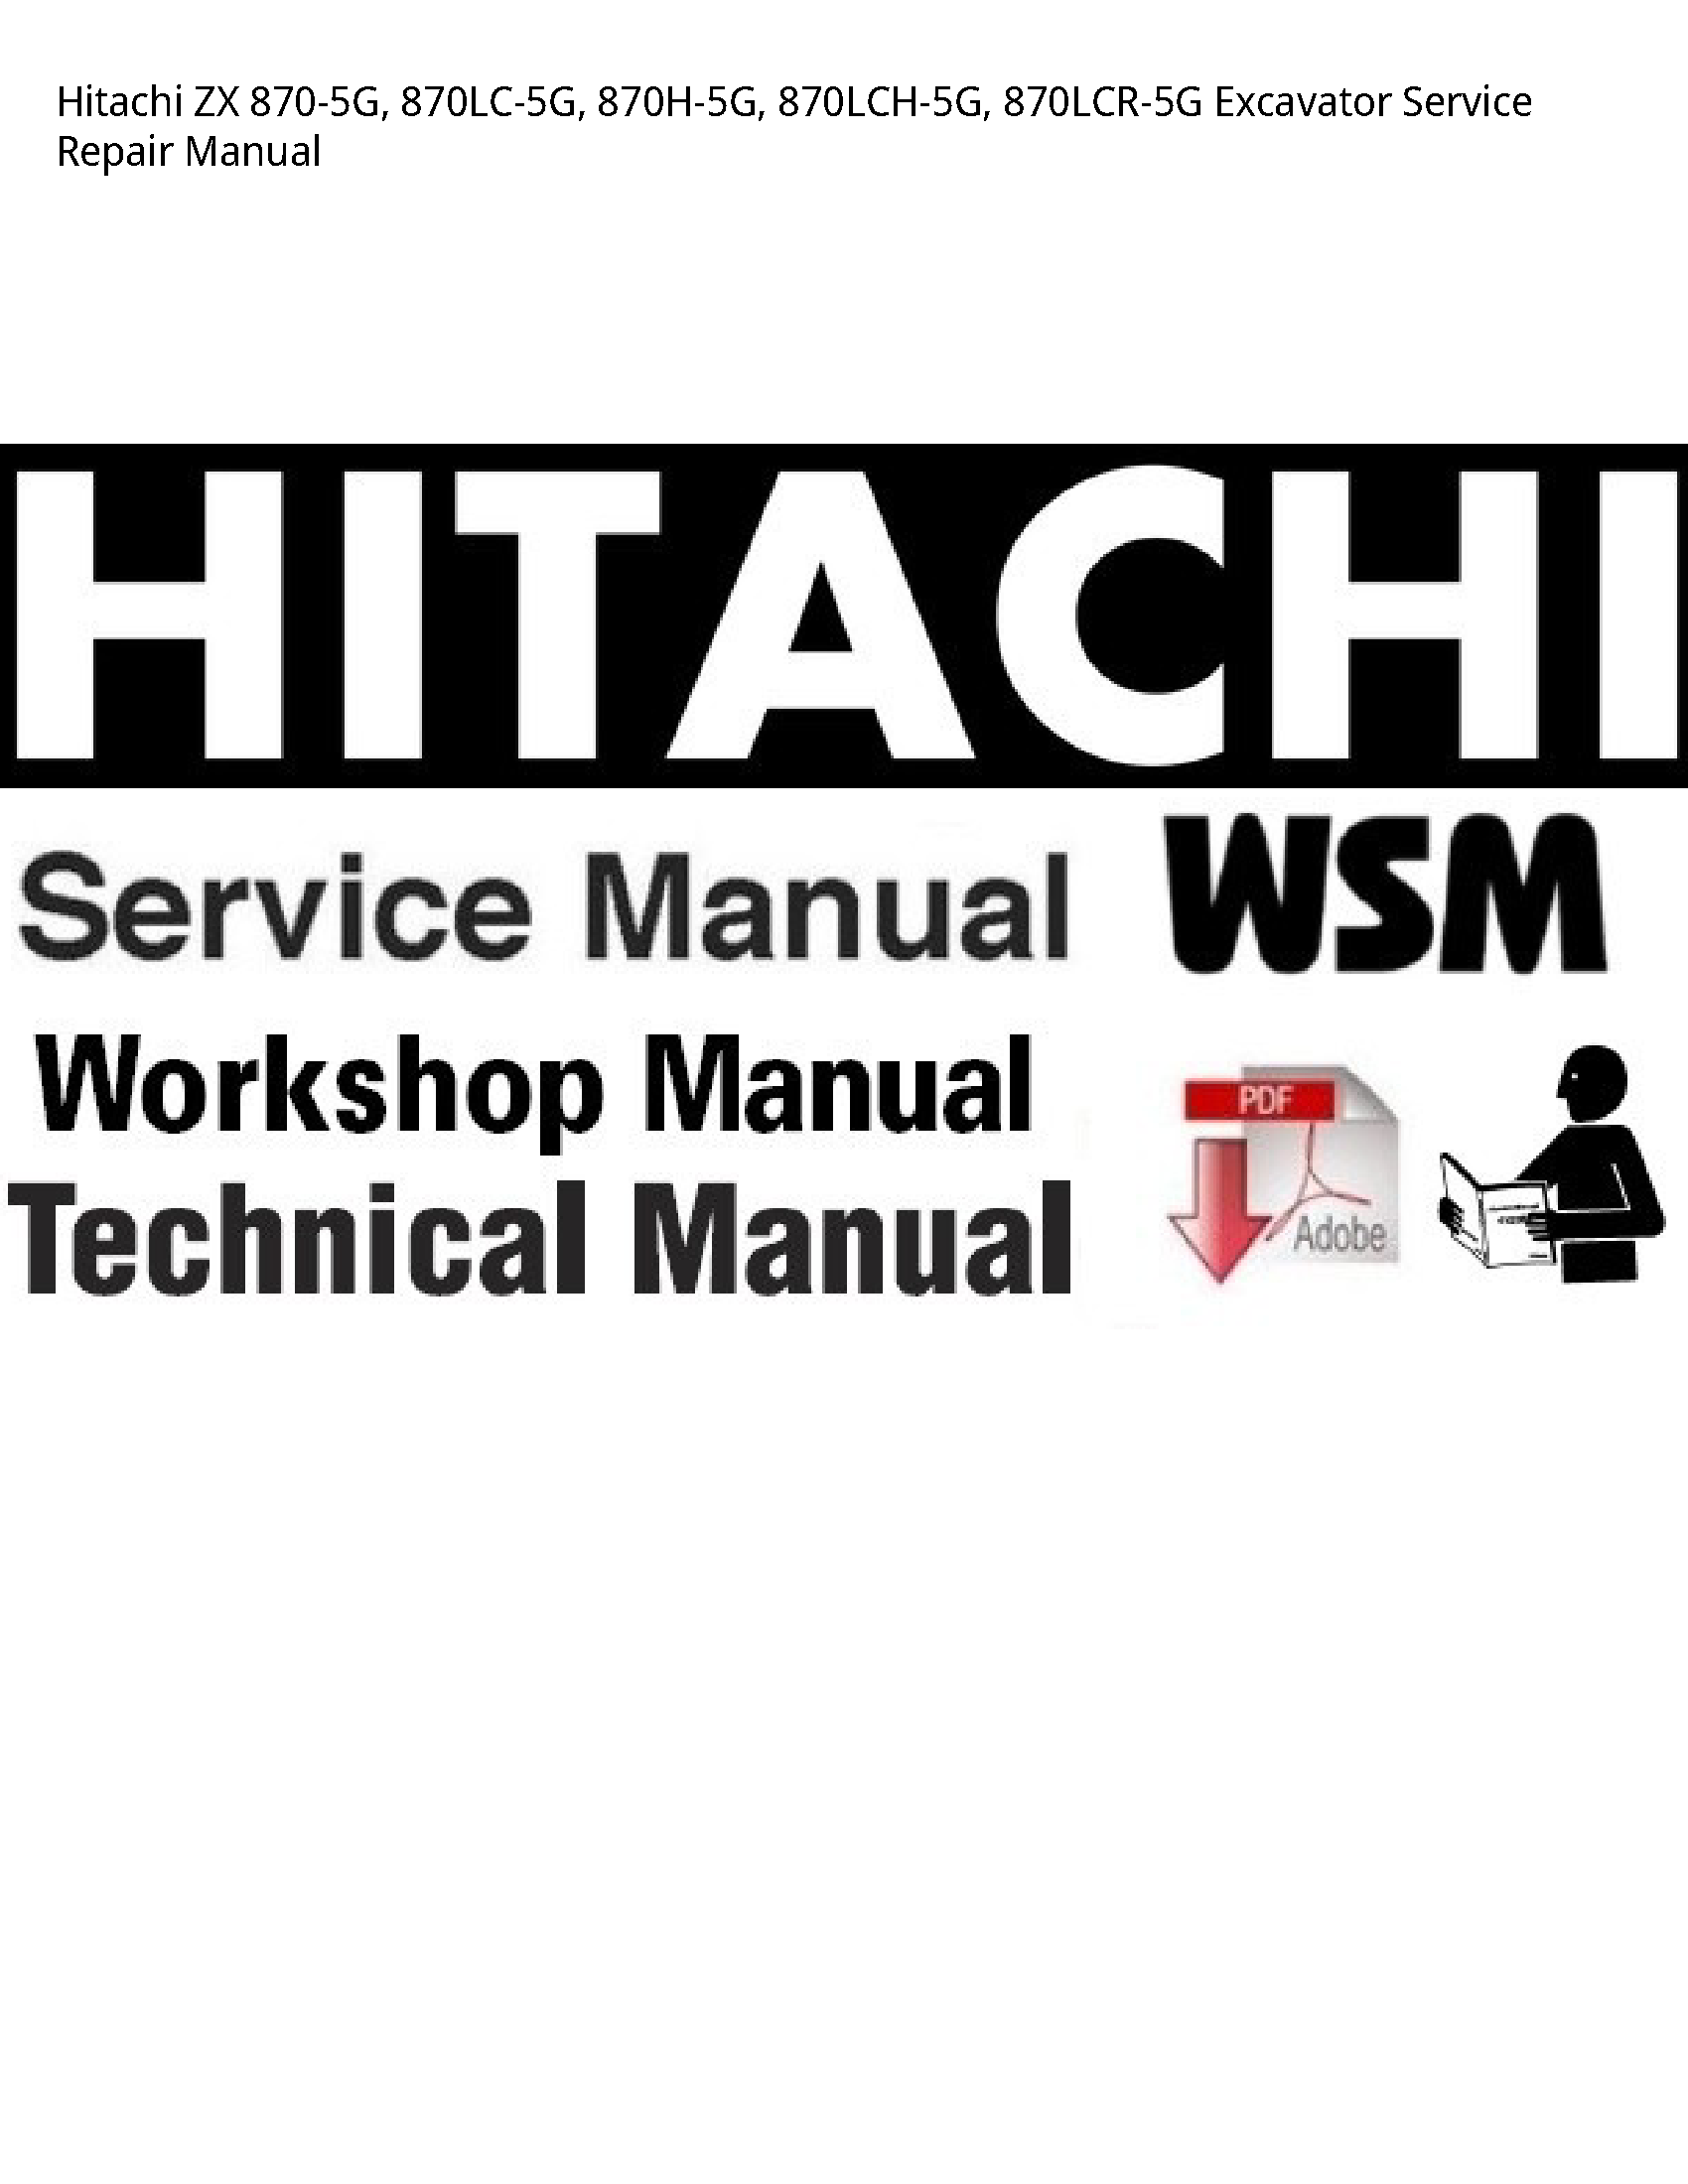 Hitachi 870-5G ZX Excavator manual